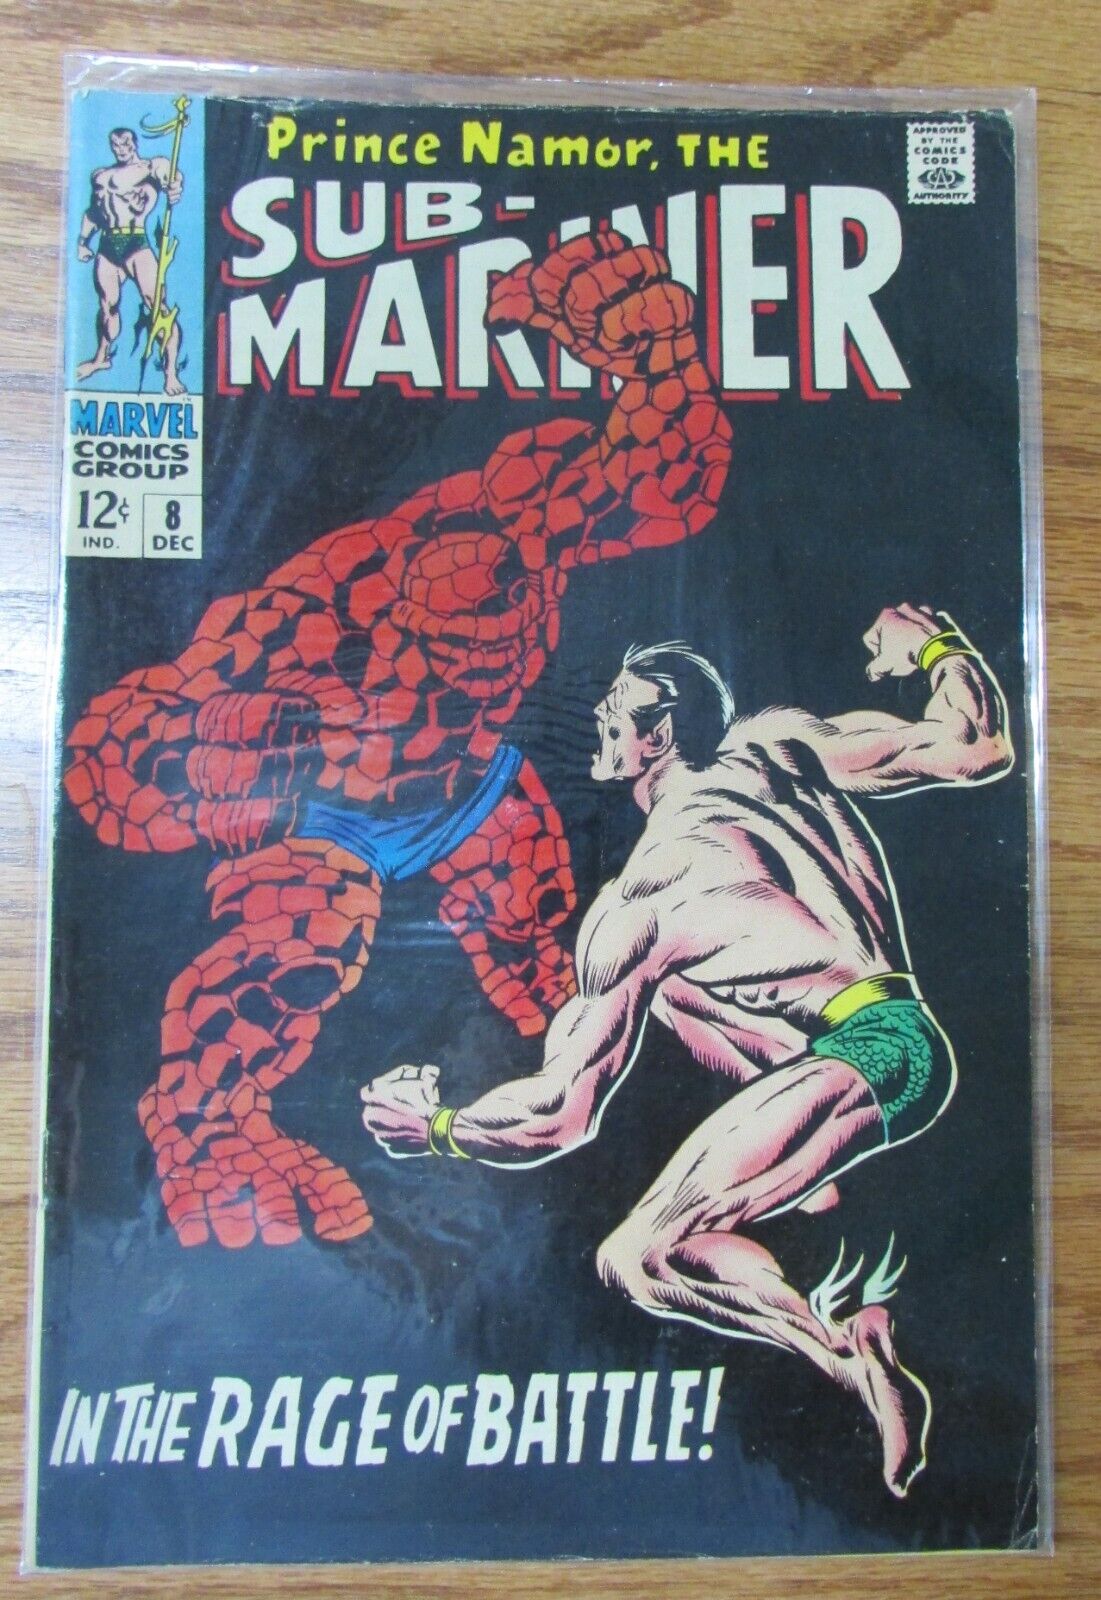 MARVEL COMIC BOOK PRINCE NAMOR THE SUB-MARINER #8 12¢ DEC 1968